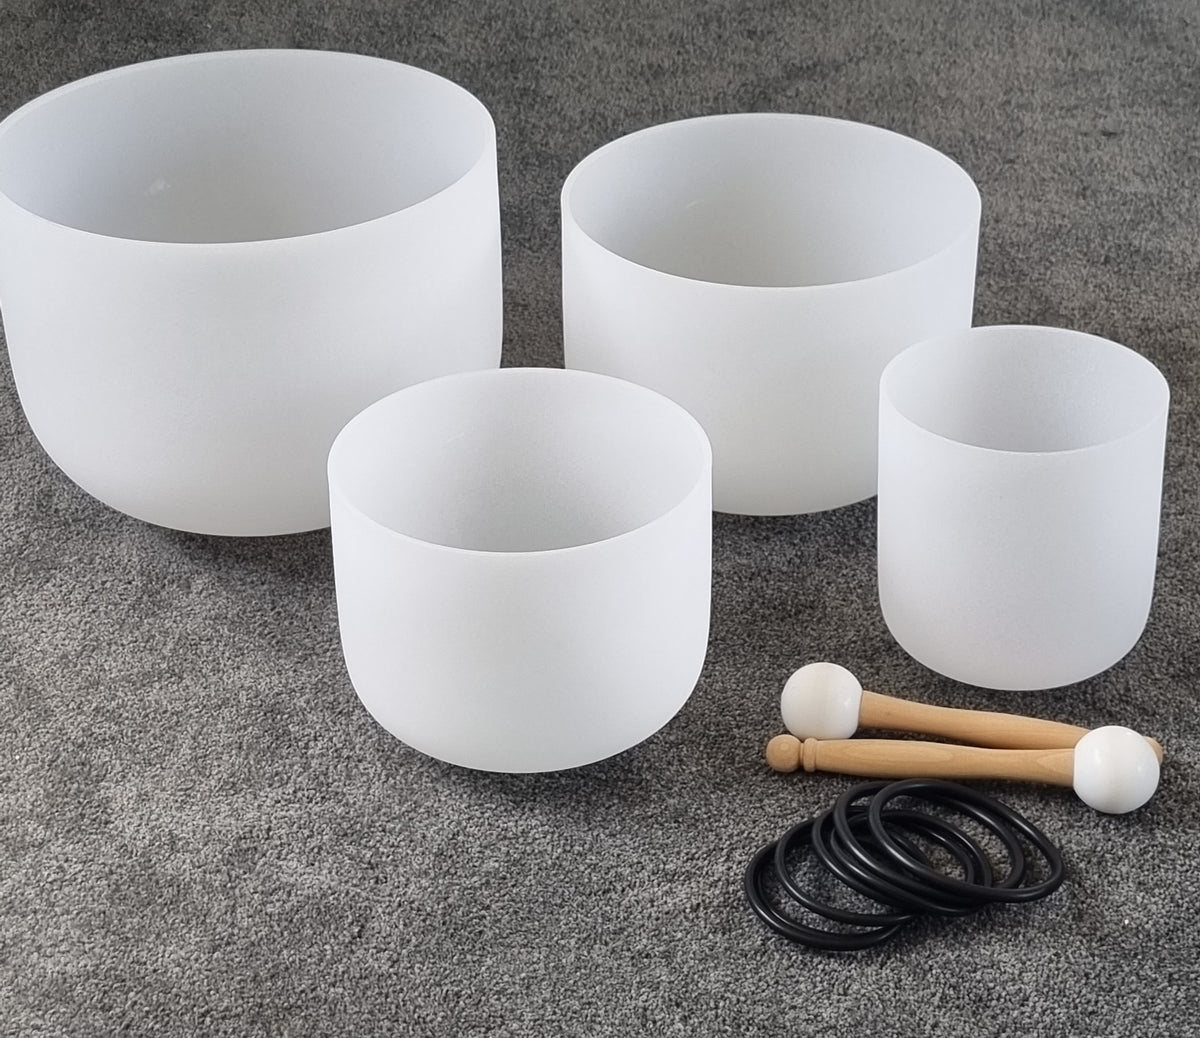 Set of 4 White Crystal Quartz Singing Bowls with Symbols